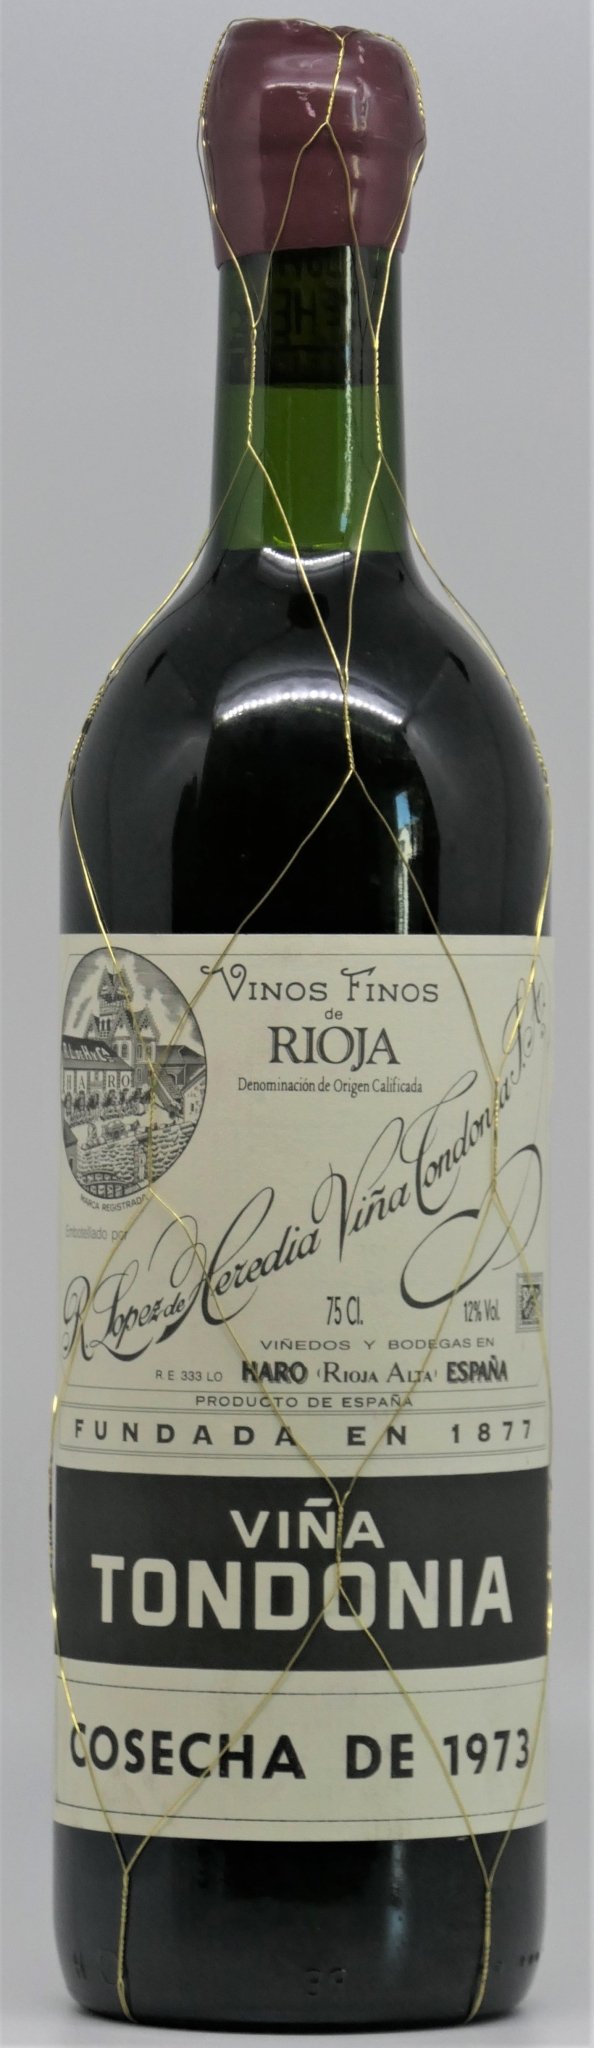 Lopez de Heredia Vina Tondonia Gran Reserva Rioja 1973 - The Spanish Table